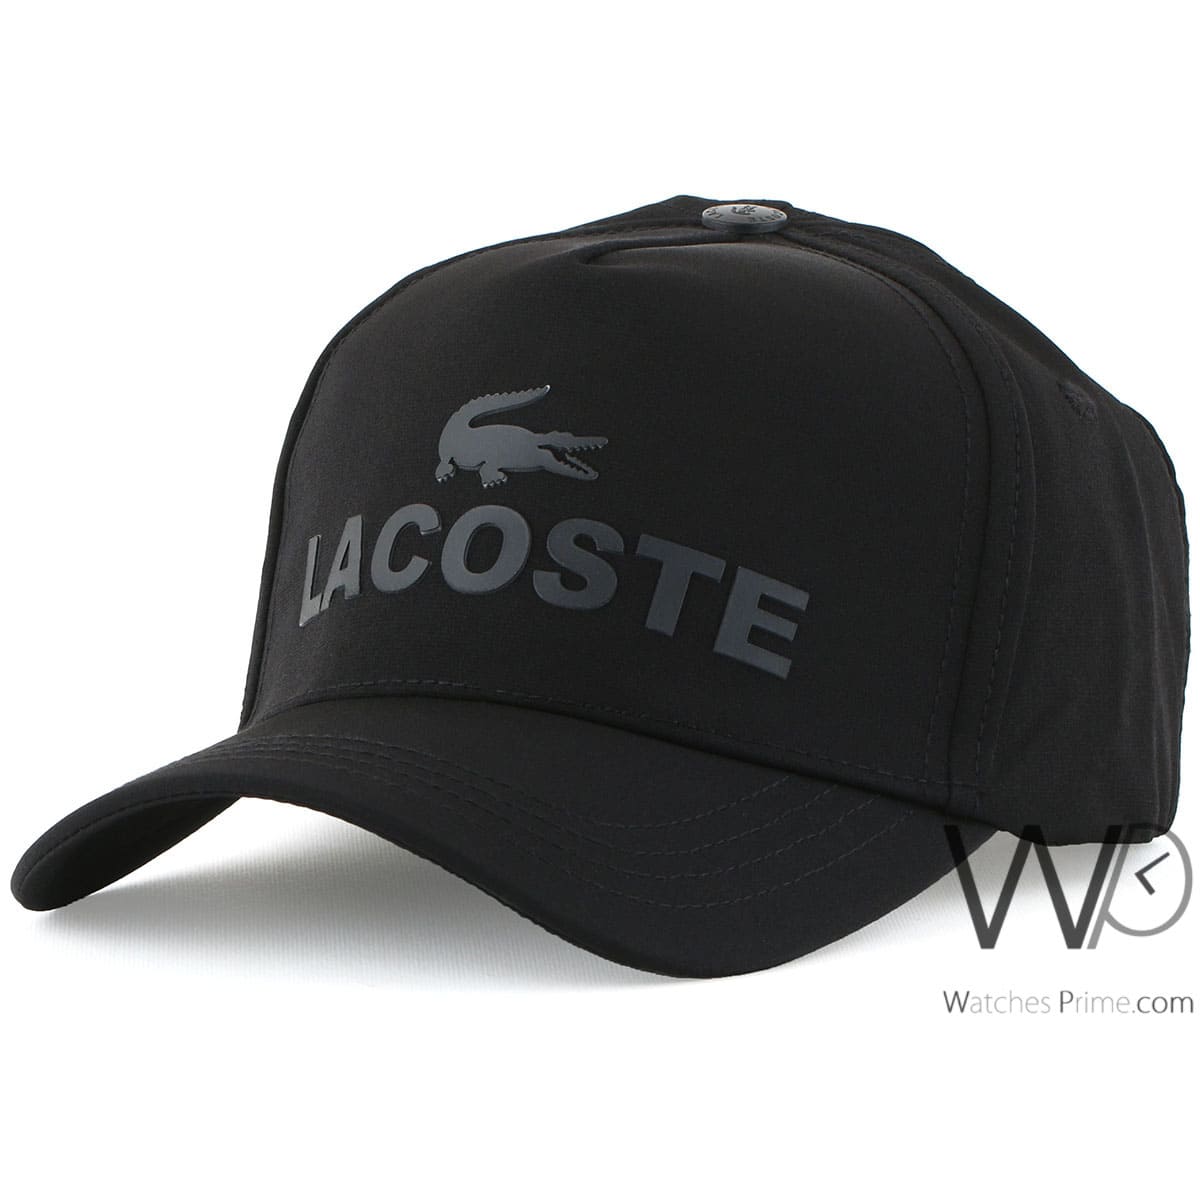 Lacoste baseball cap for men black | Watches Prime